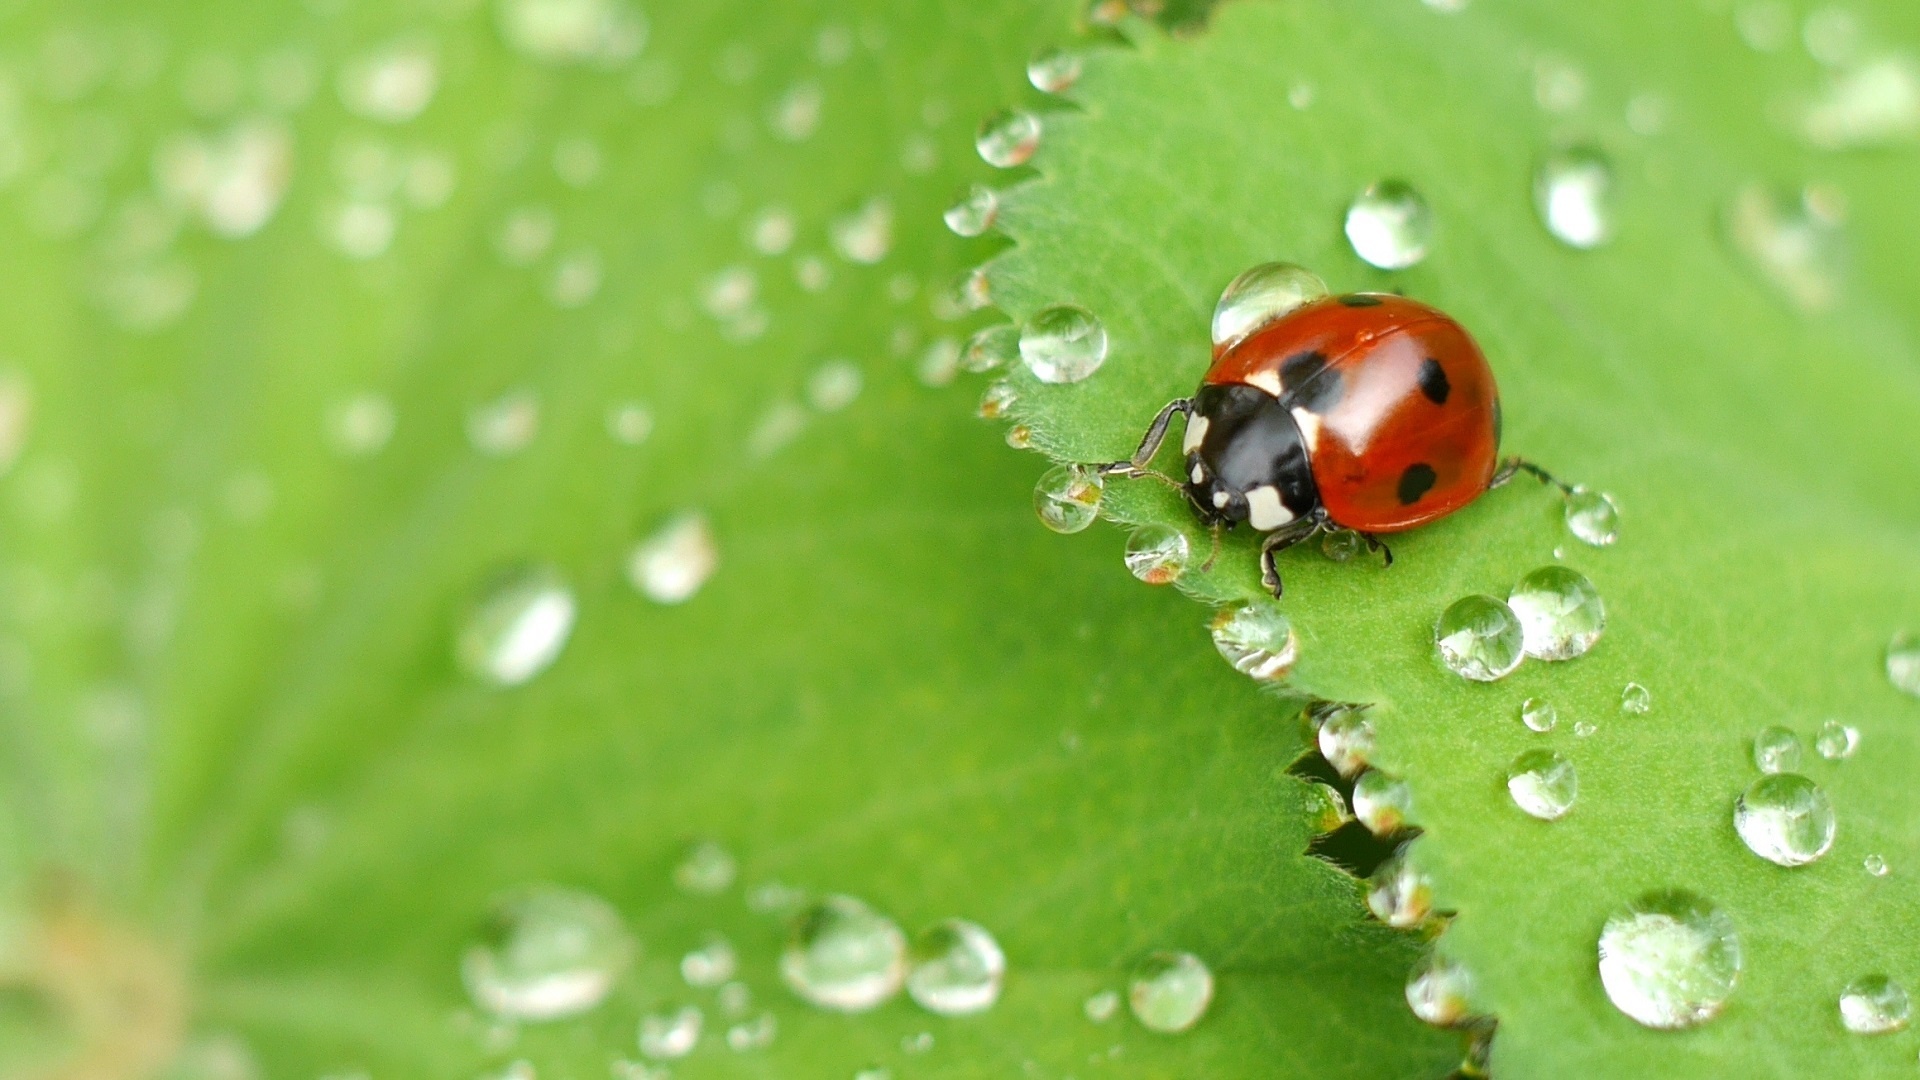 Ladybug On Wet Leaf